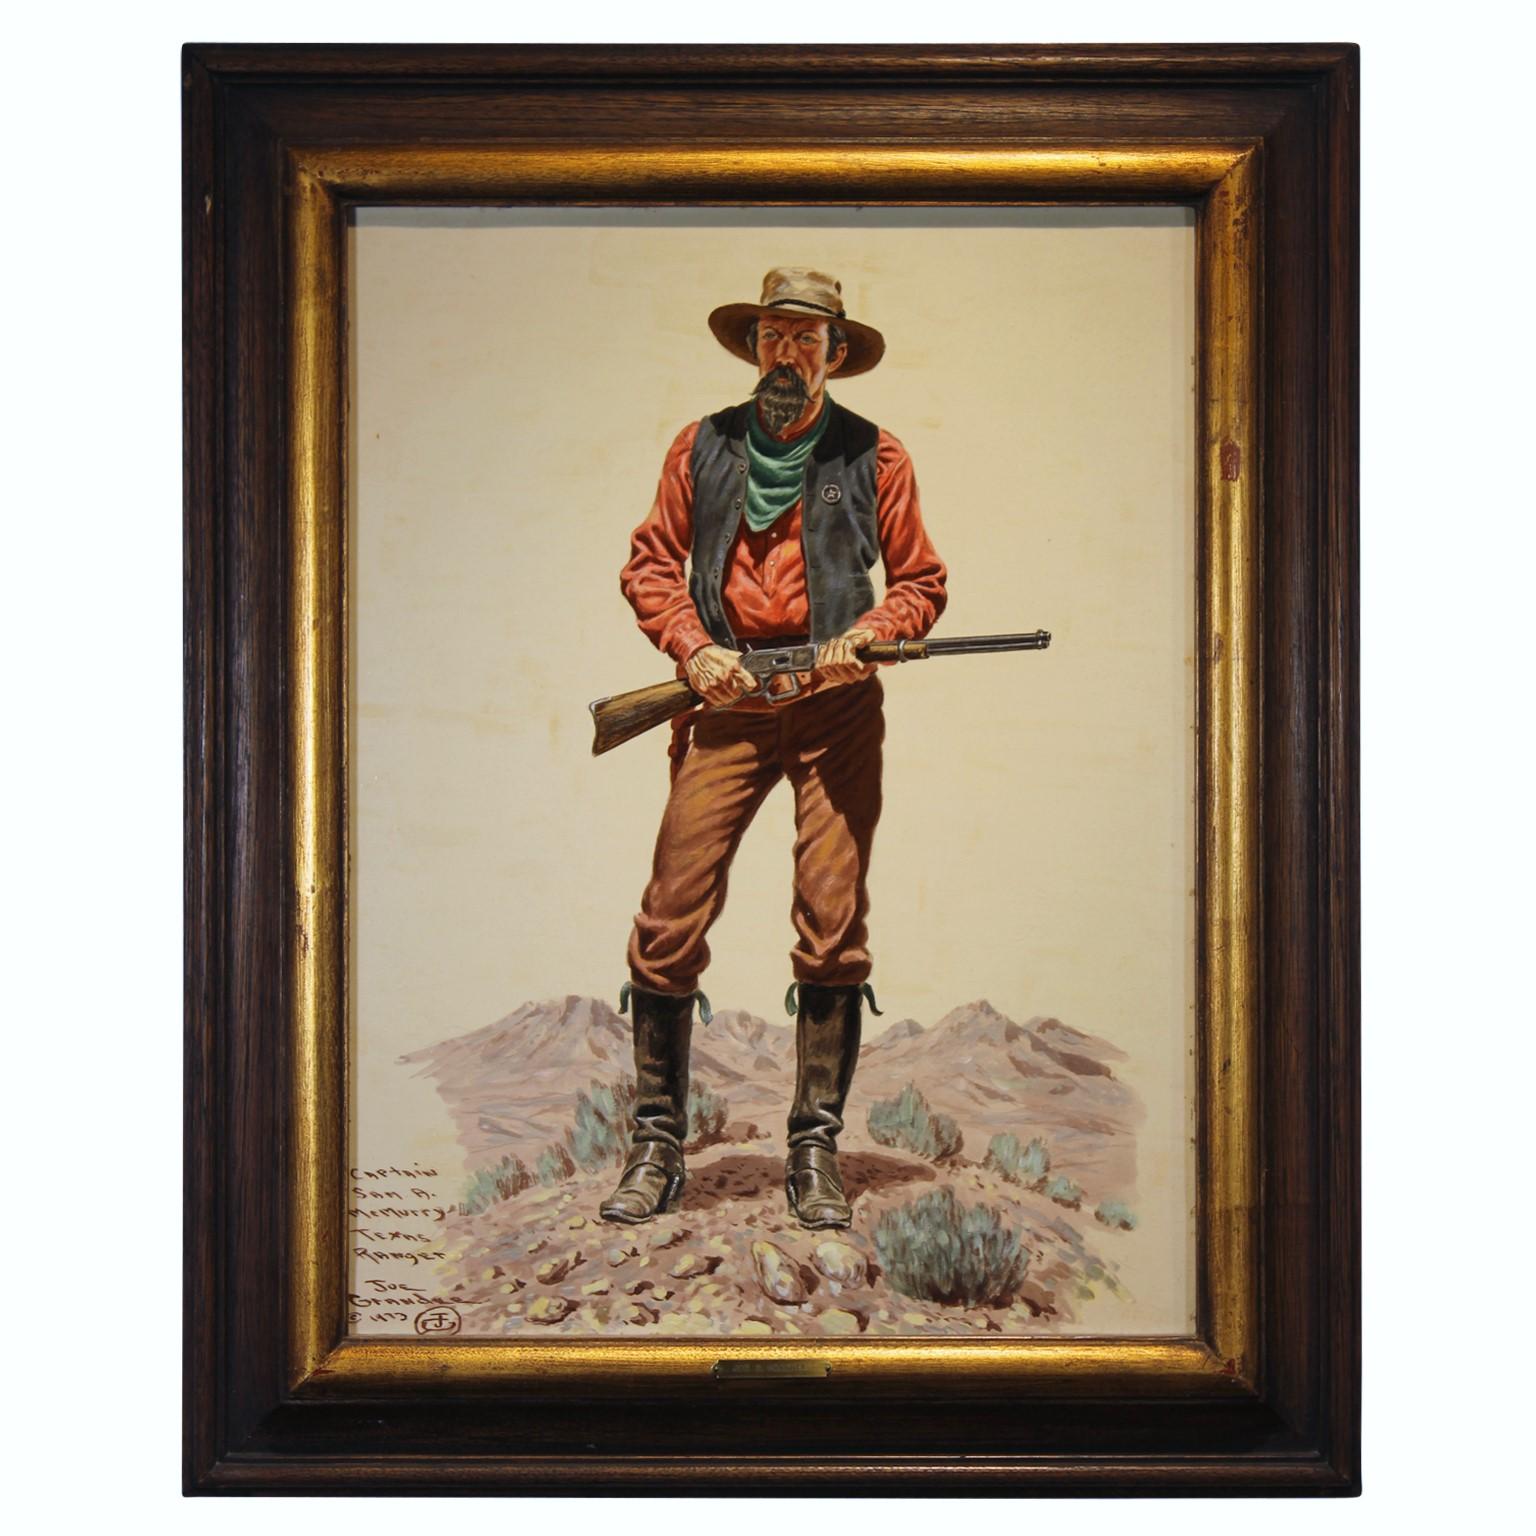 Joe Ruiz Grandee Figurative Painting - "Captain McMurry" Western Portrait Painting